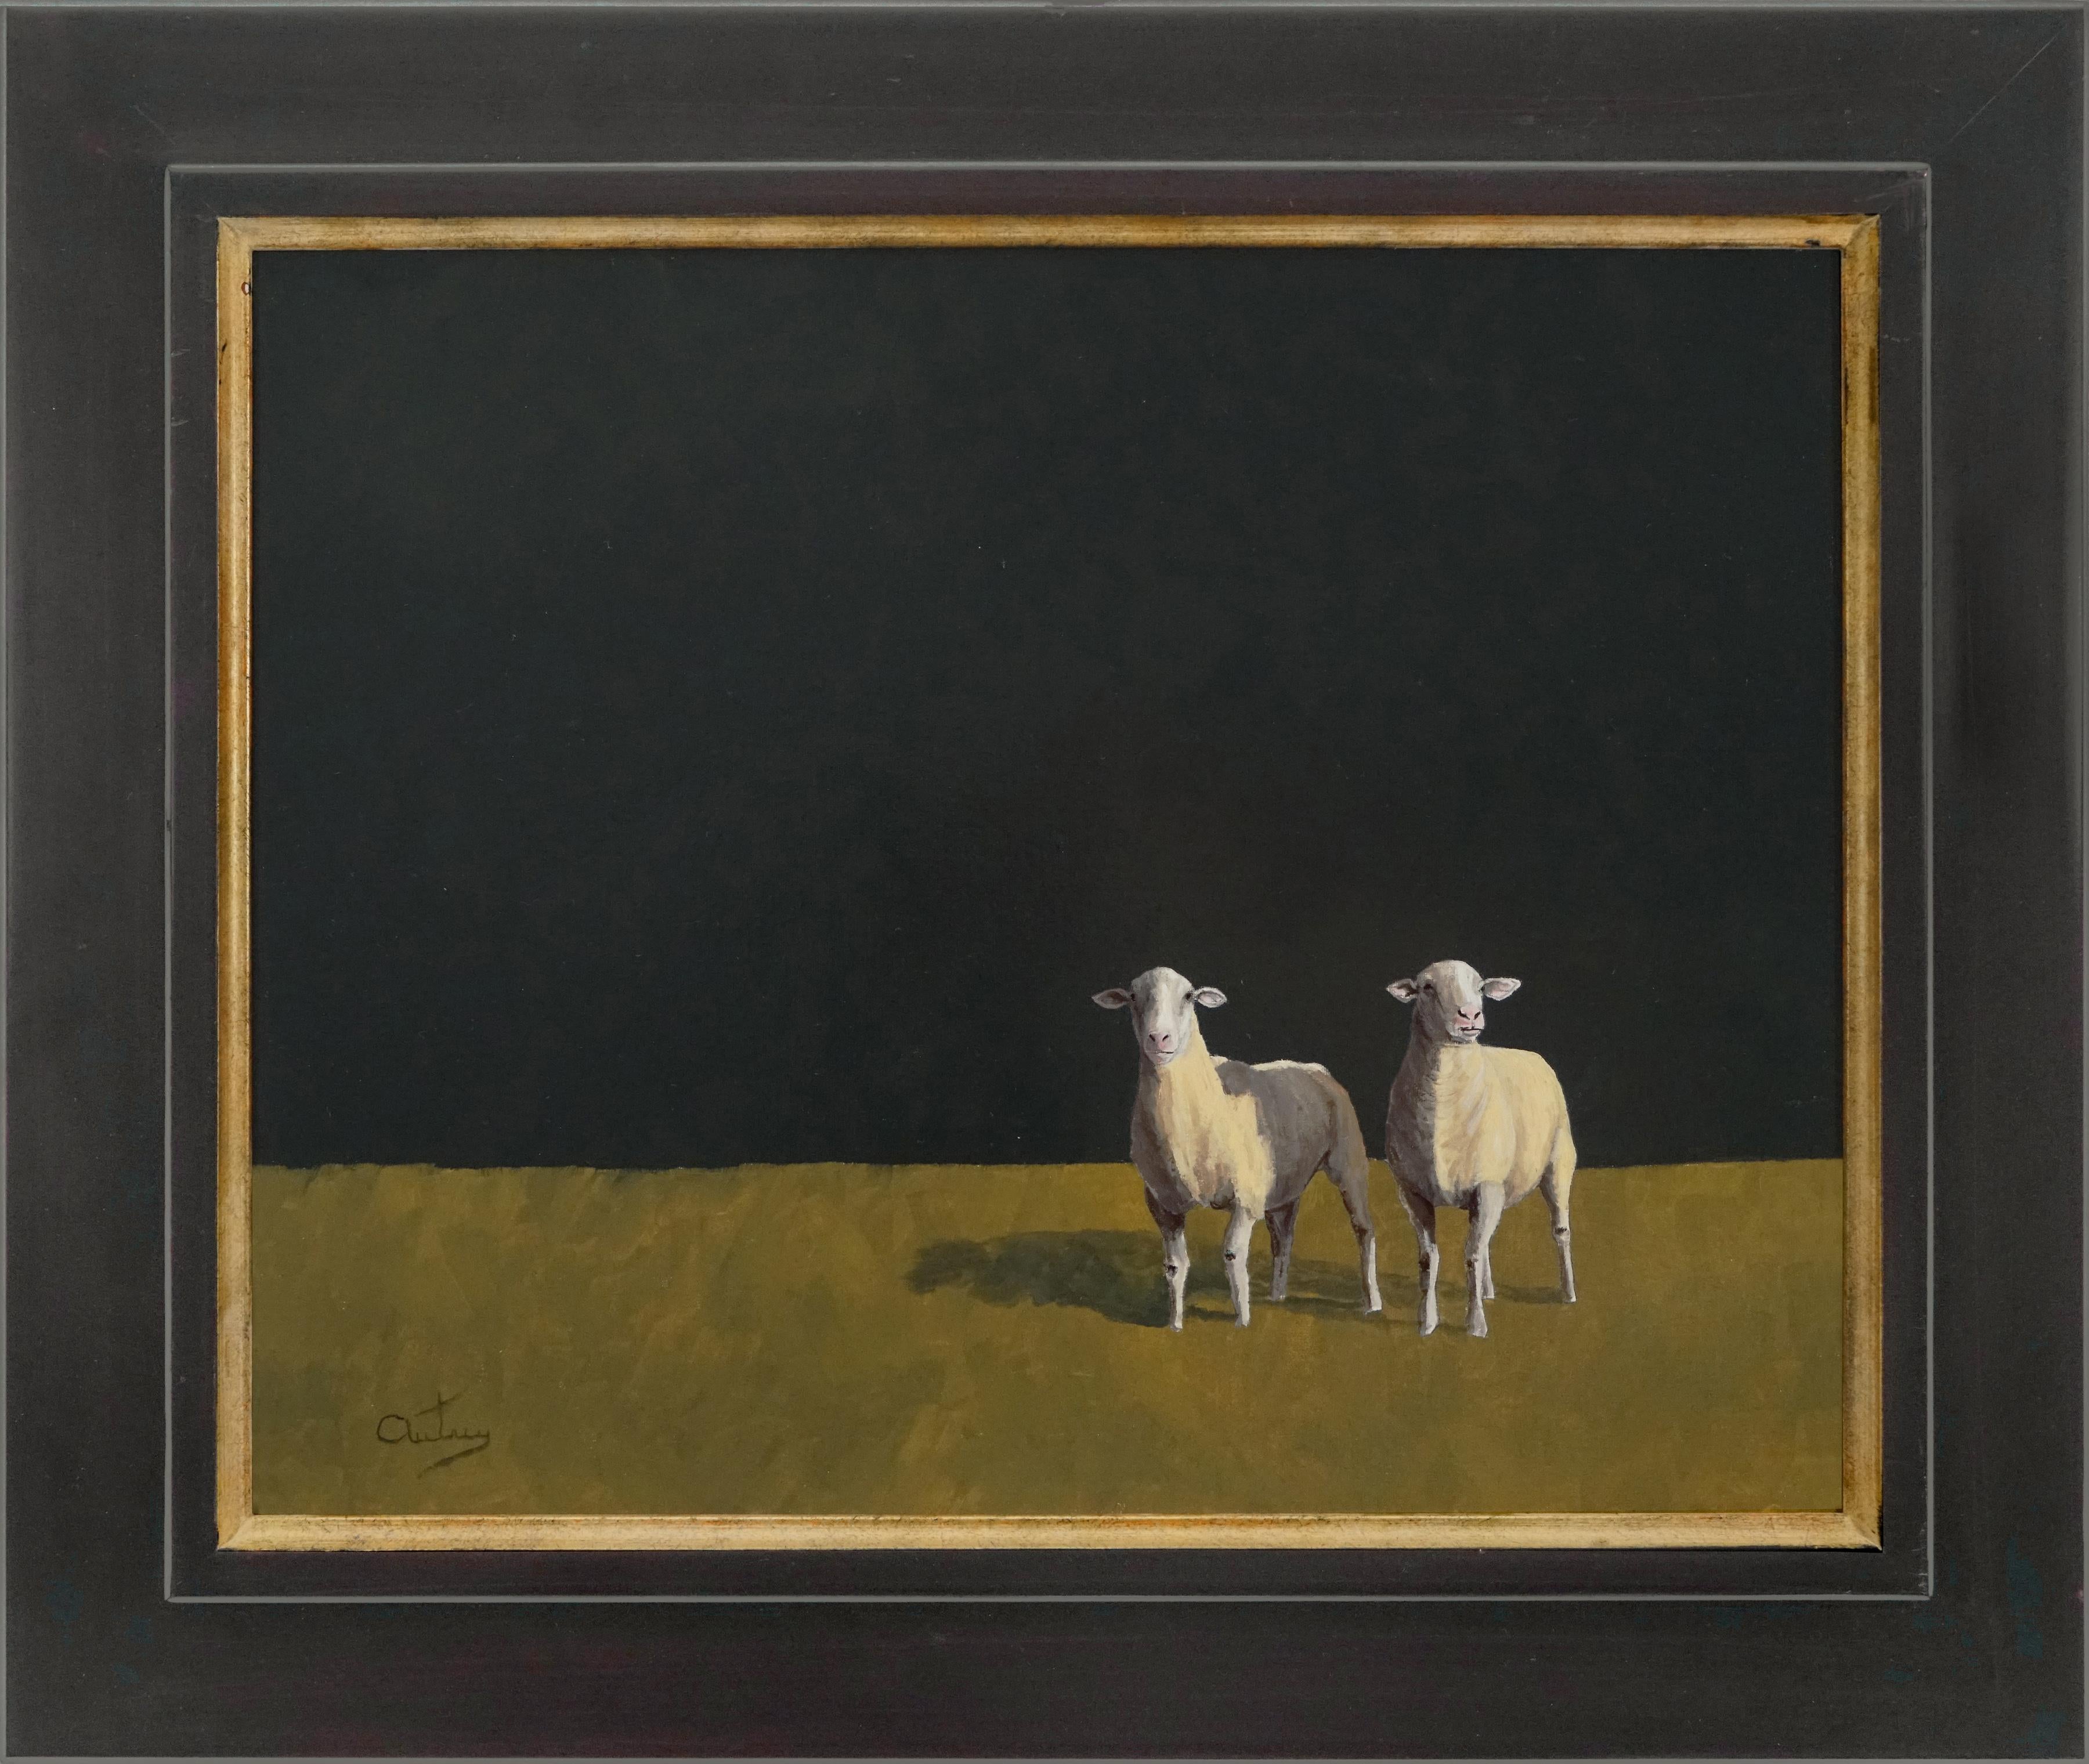 Luke Autrey Landscape Painting - Grazing, Realism, Light/ Shadow, Sheep, Southwest Art, Oil Painting, Landscape,